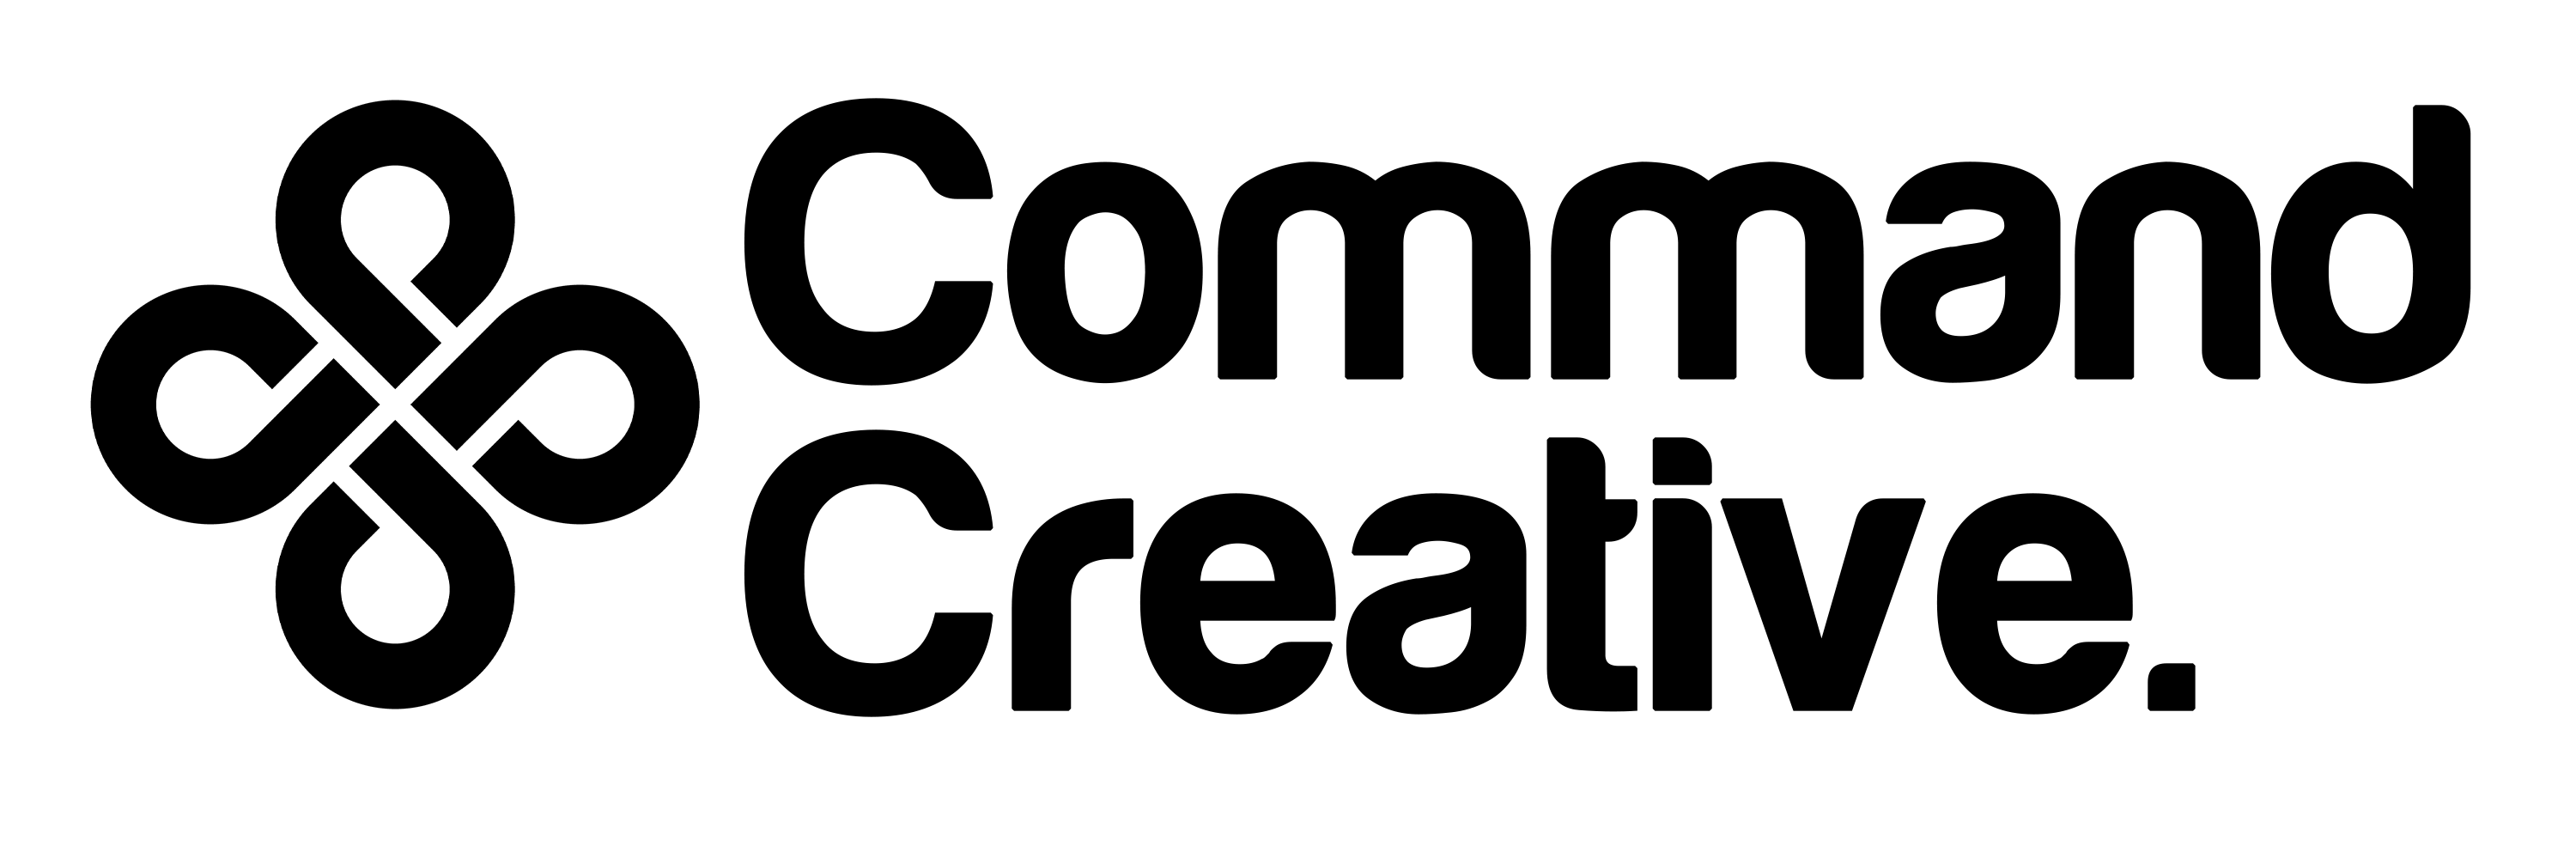 Command Creative